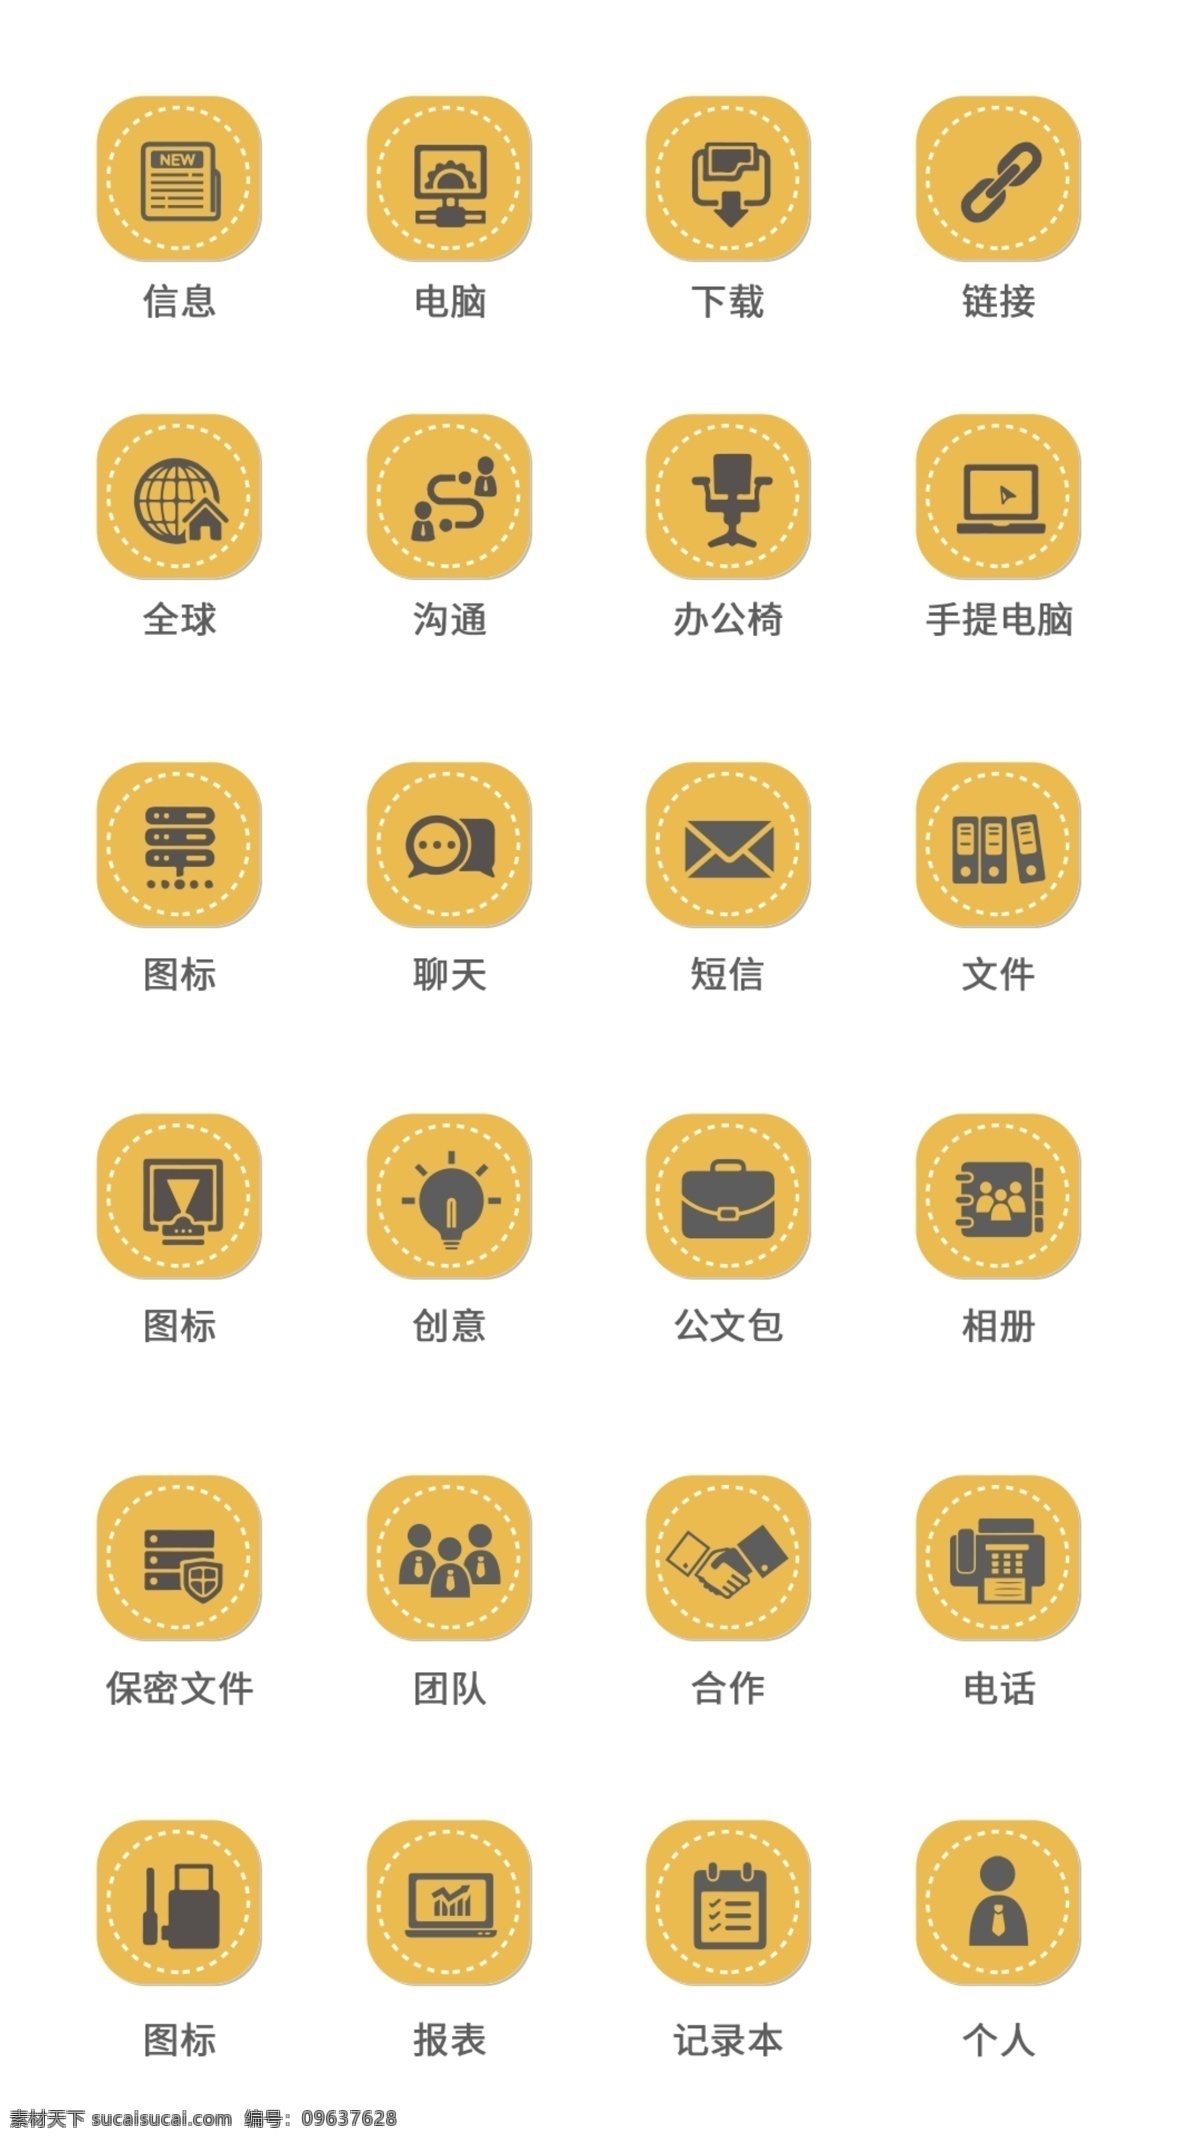 ui 商务办公 icon 图标 图标icon 时尚图标 商务icon ui设计 icon设计 办公图标 商务图标 ui设计图标